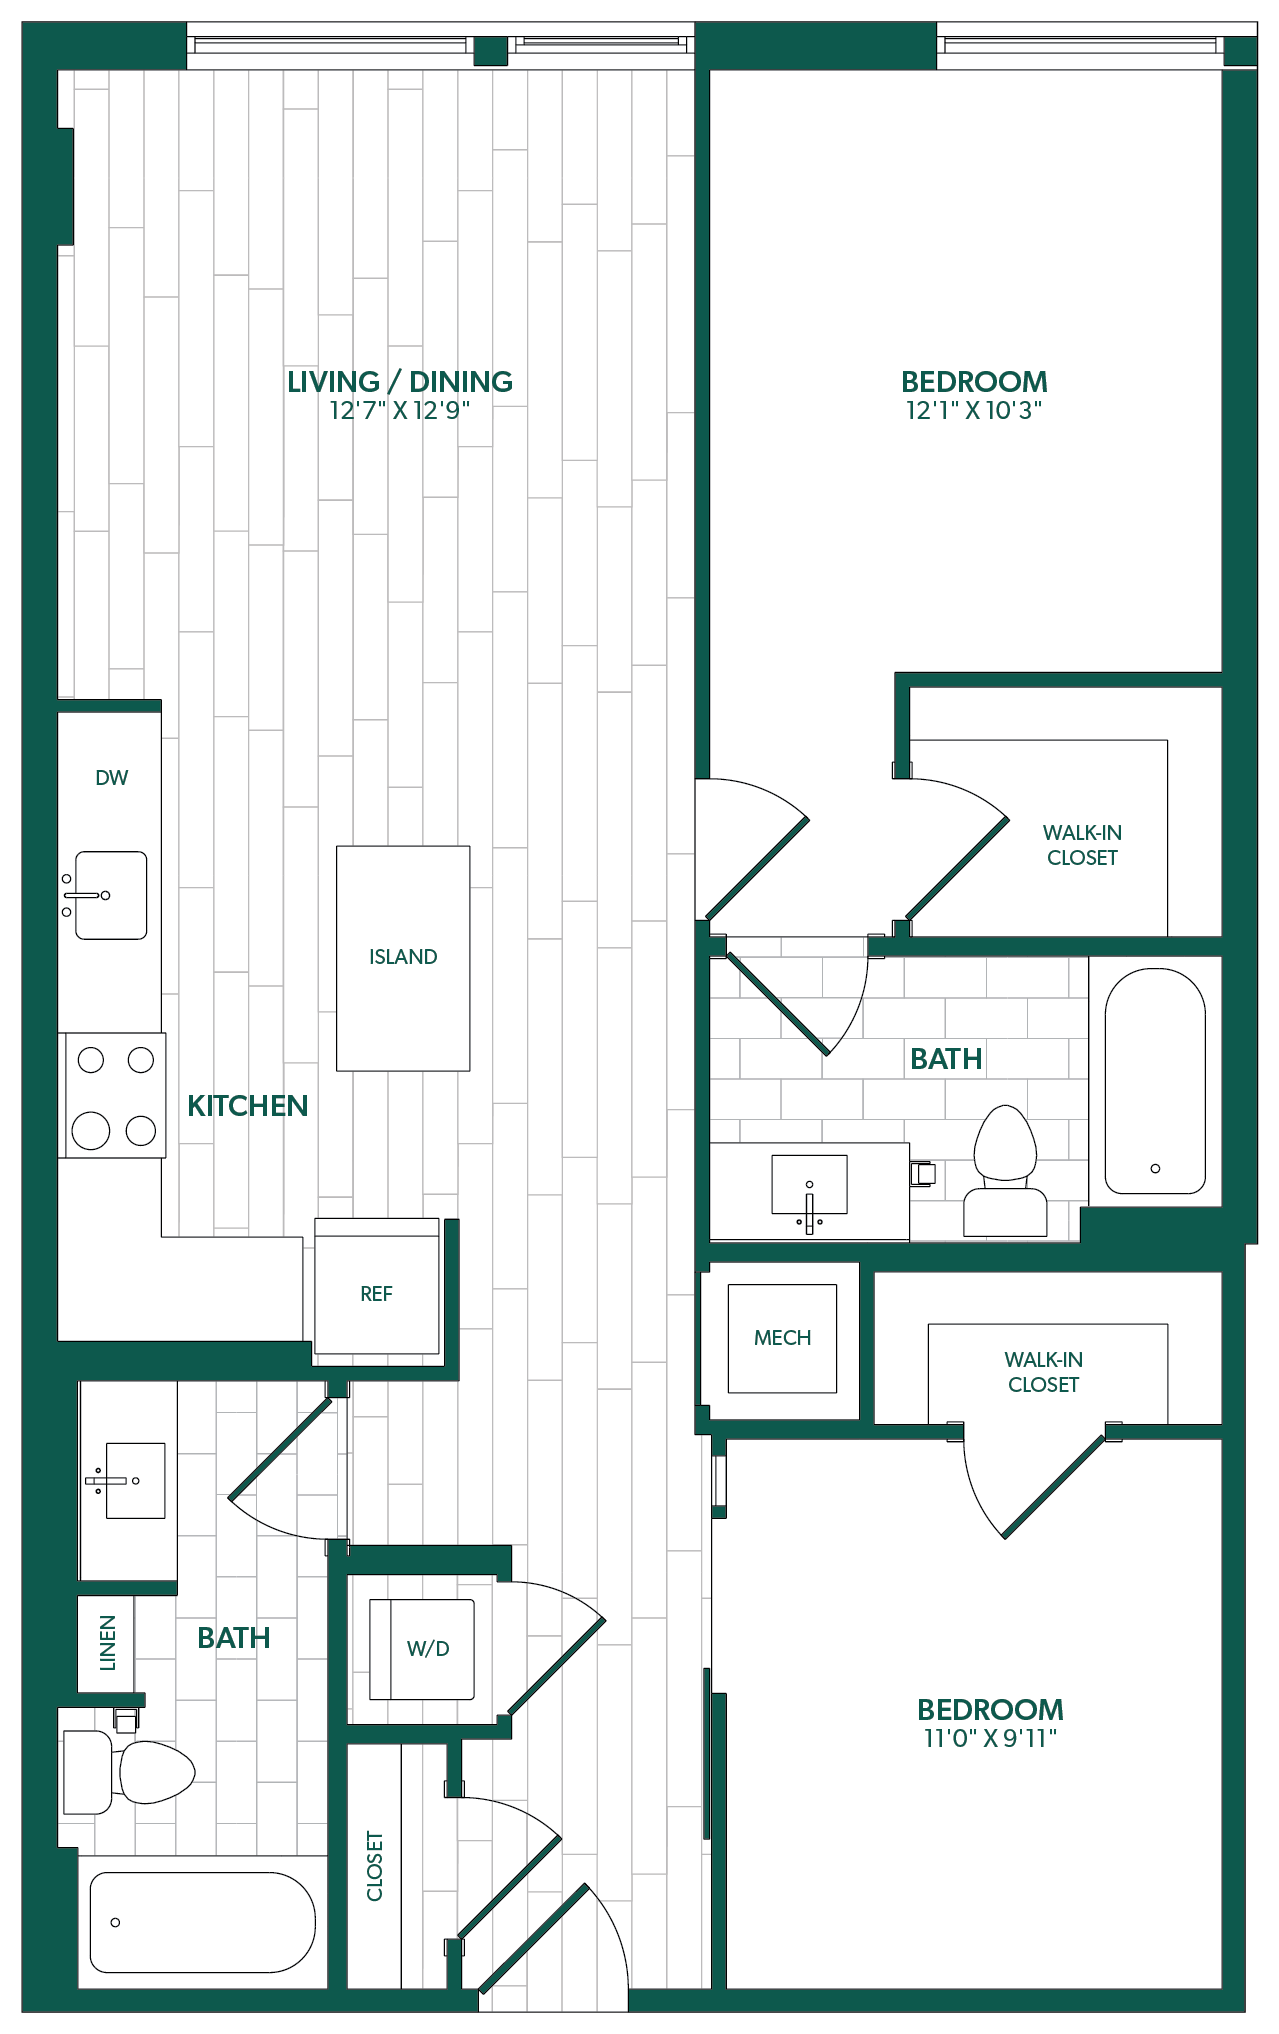 Floor Plan Image of Apartment Apt 0406